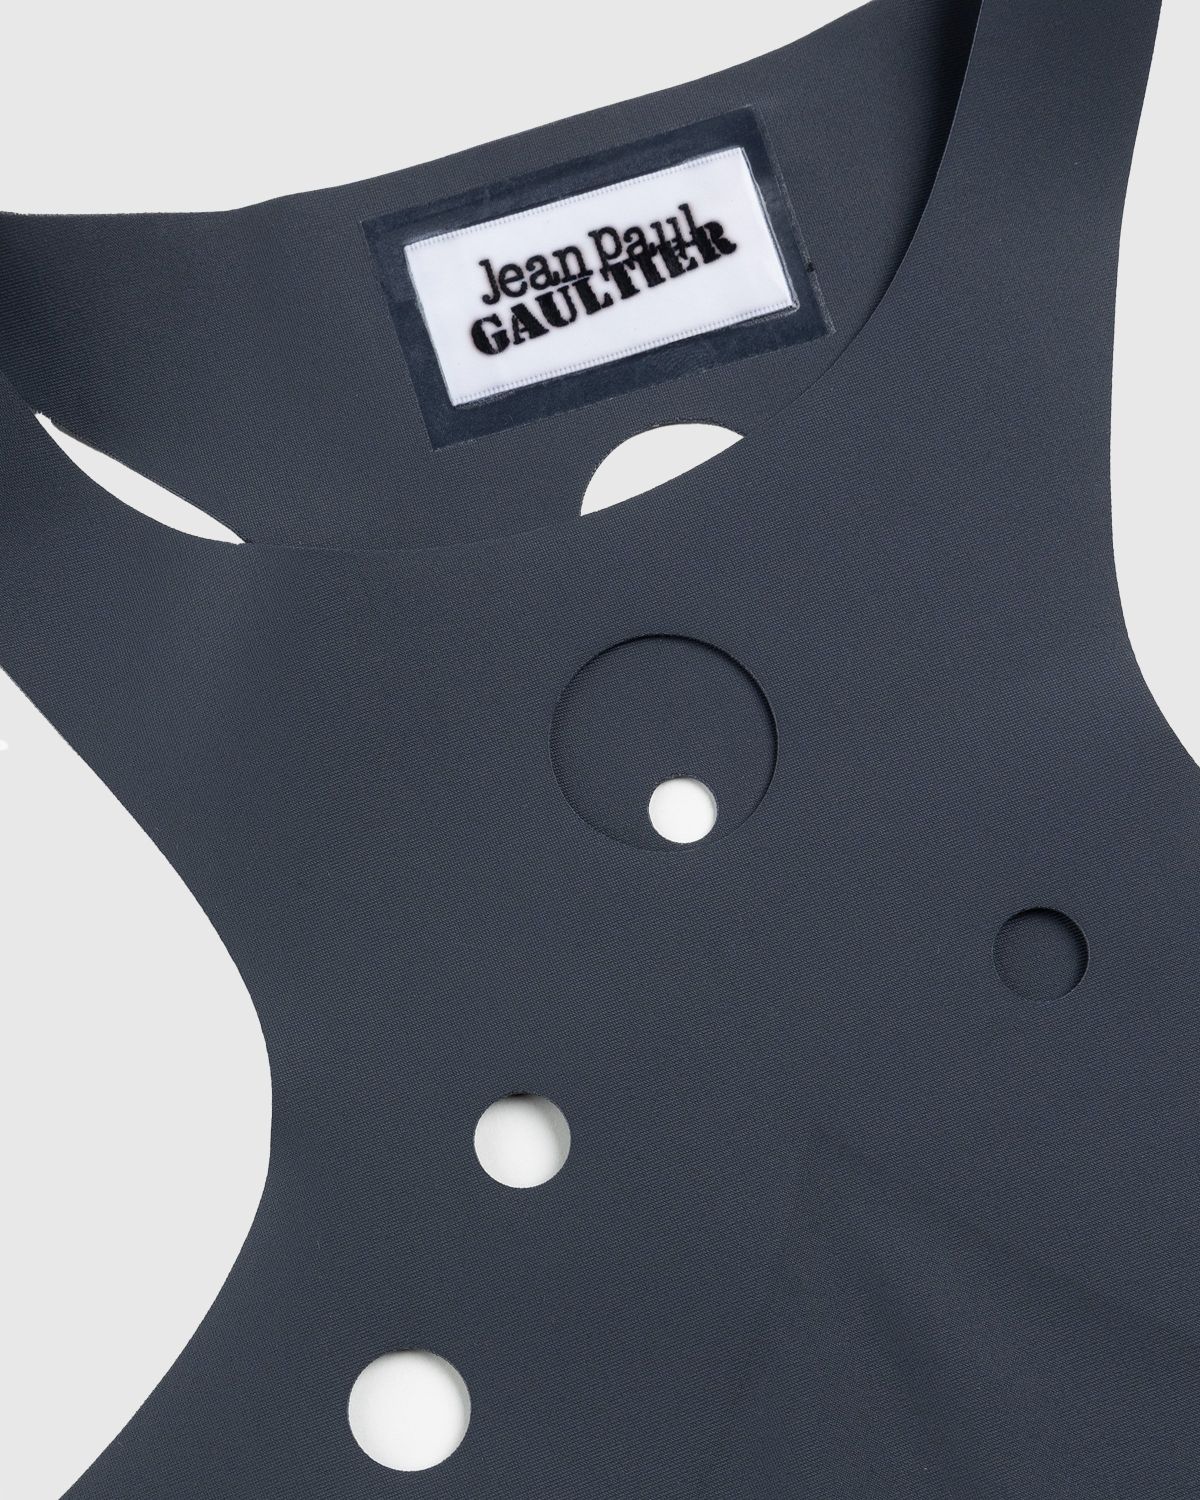 Jean Paul Gaultier – Perforated Details Tanktop - Men Tops - Grey - Image 8